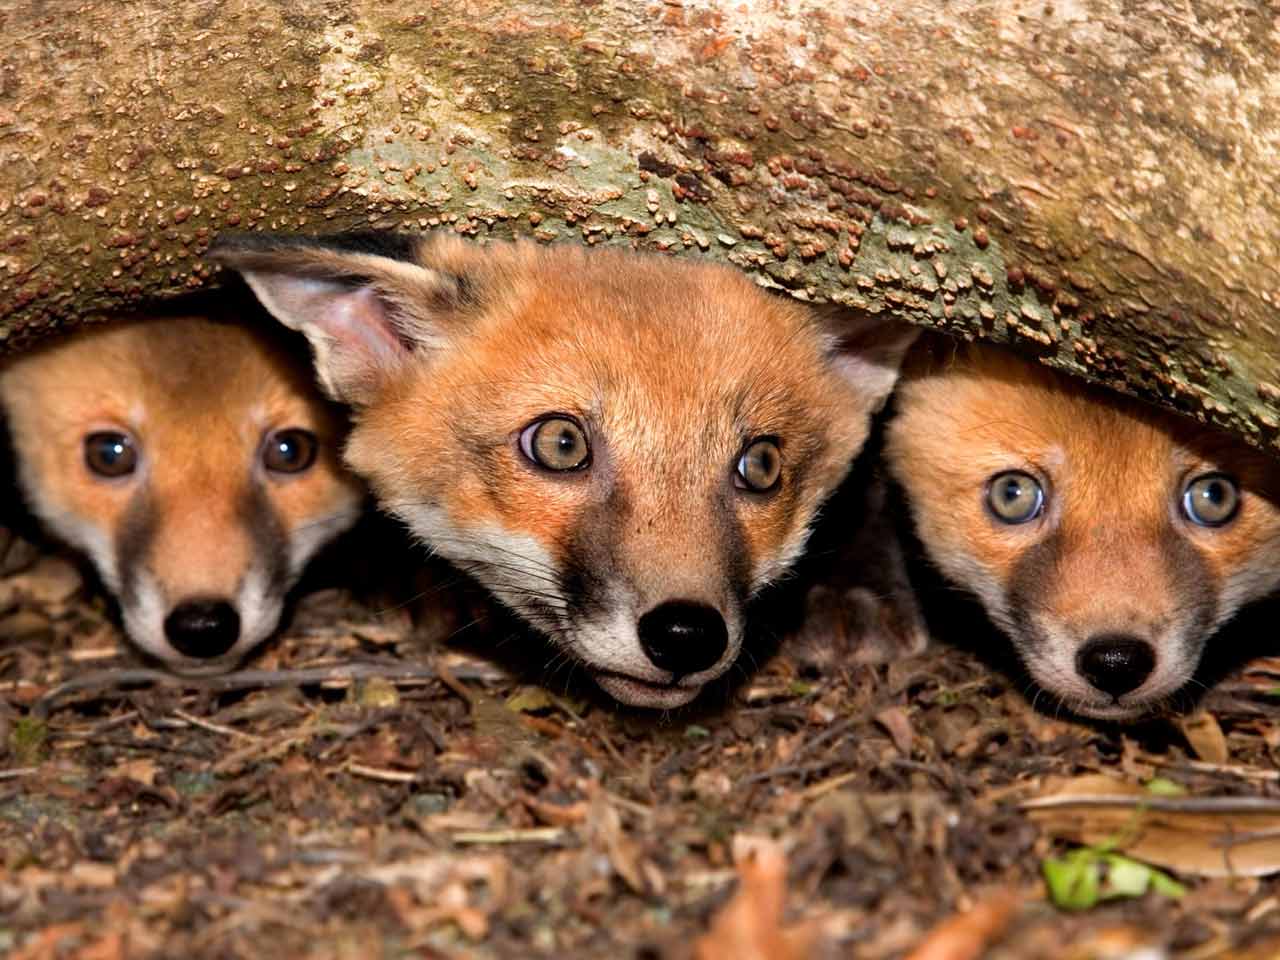 Should I Feed fox cubs in my garden?